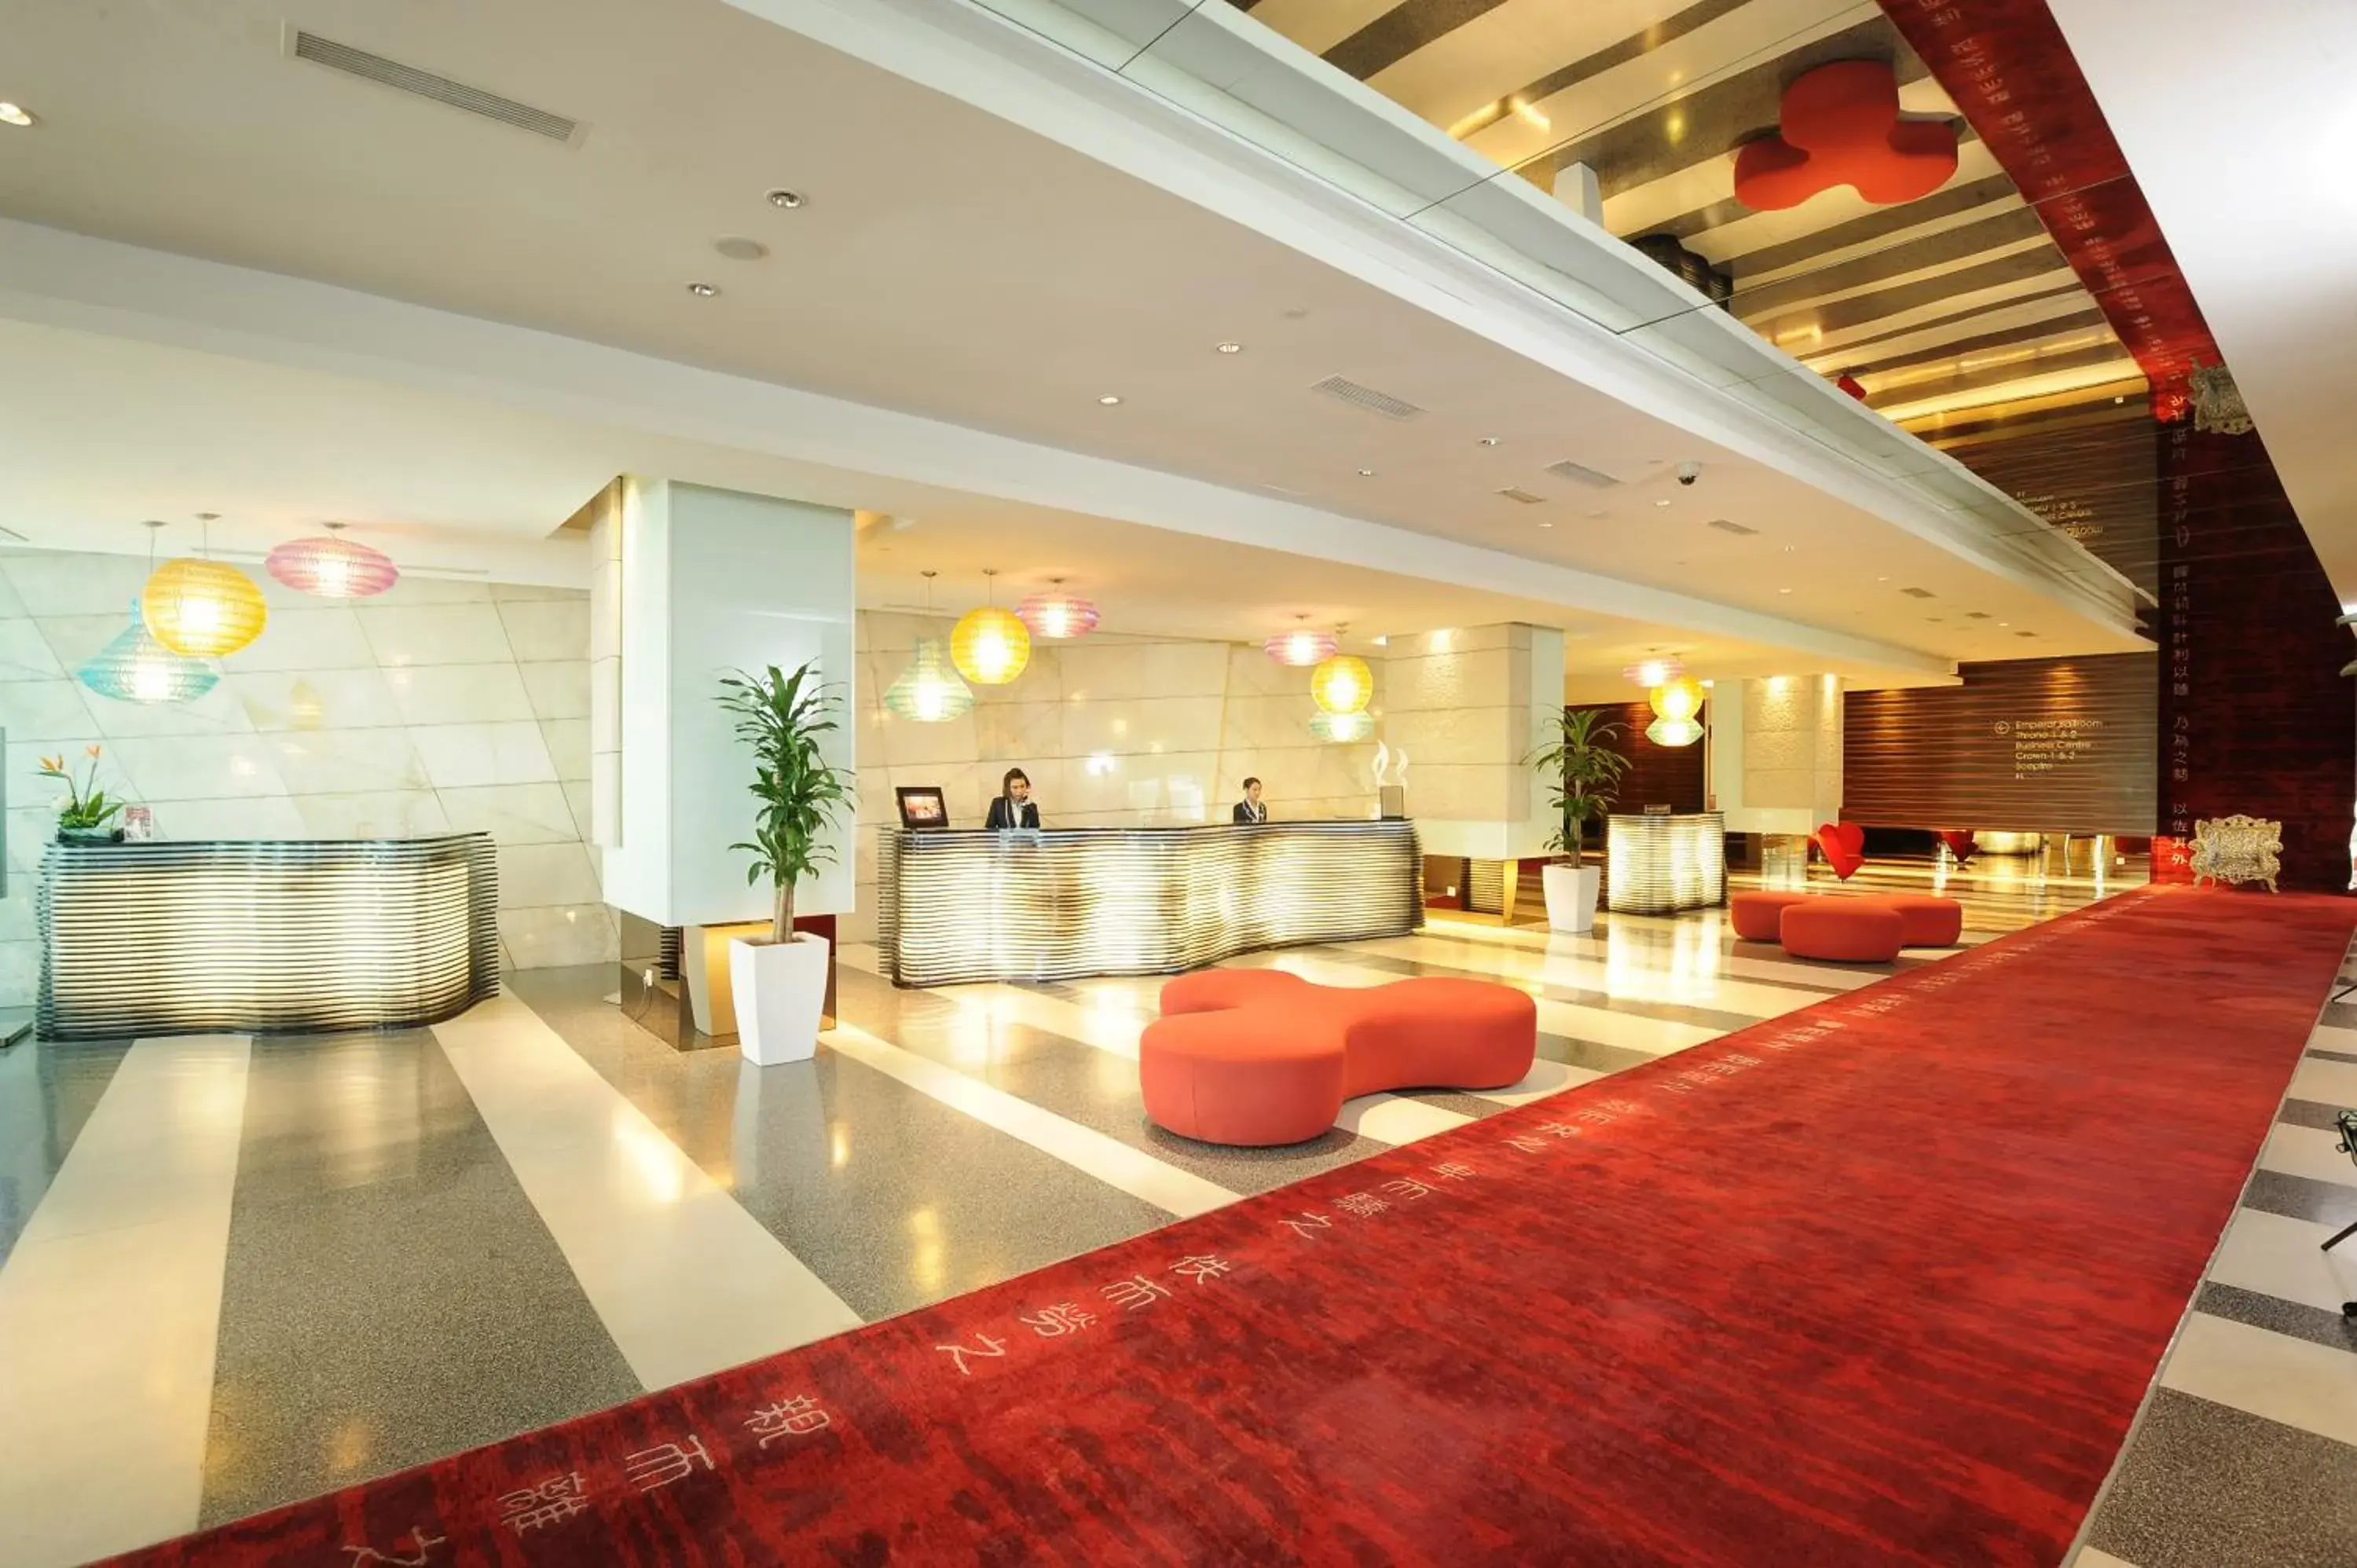 Lobby or reception in Empire Hotel Subang